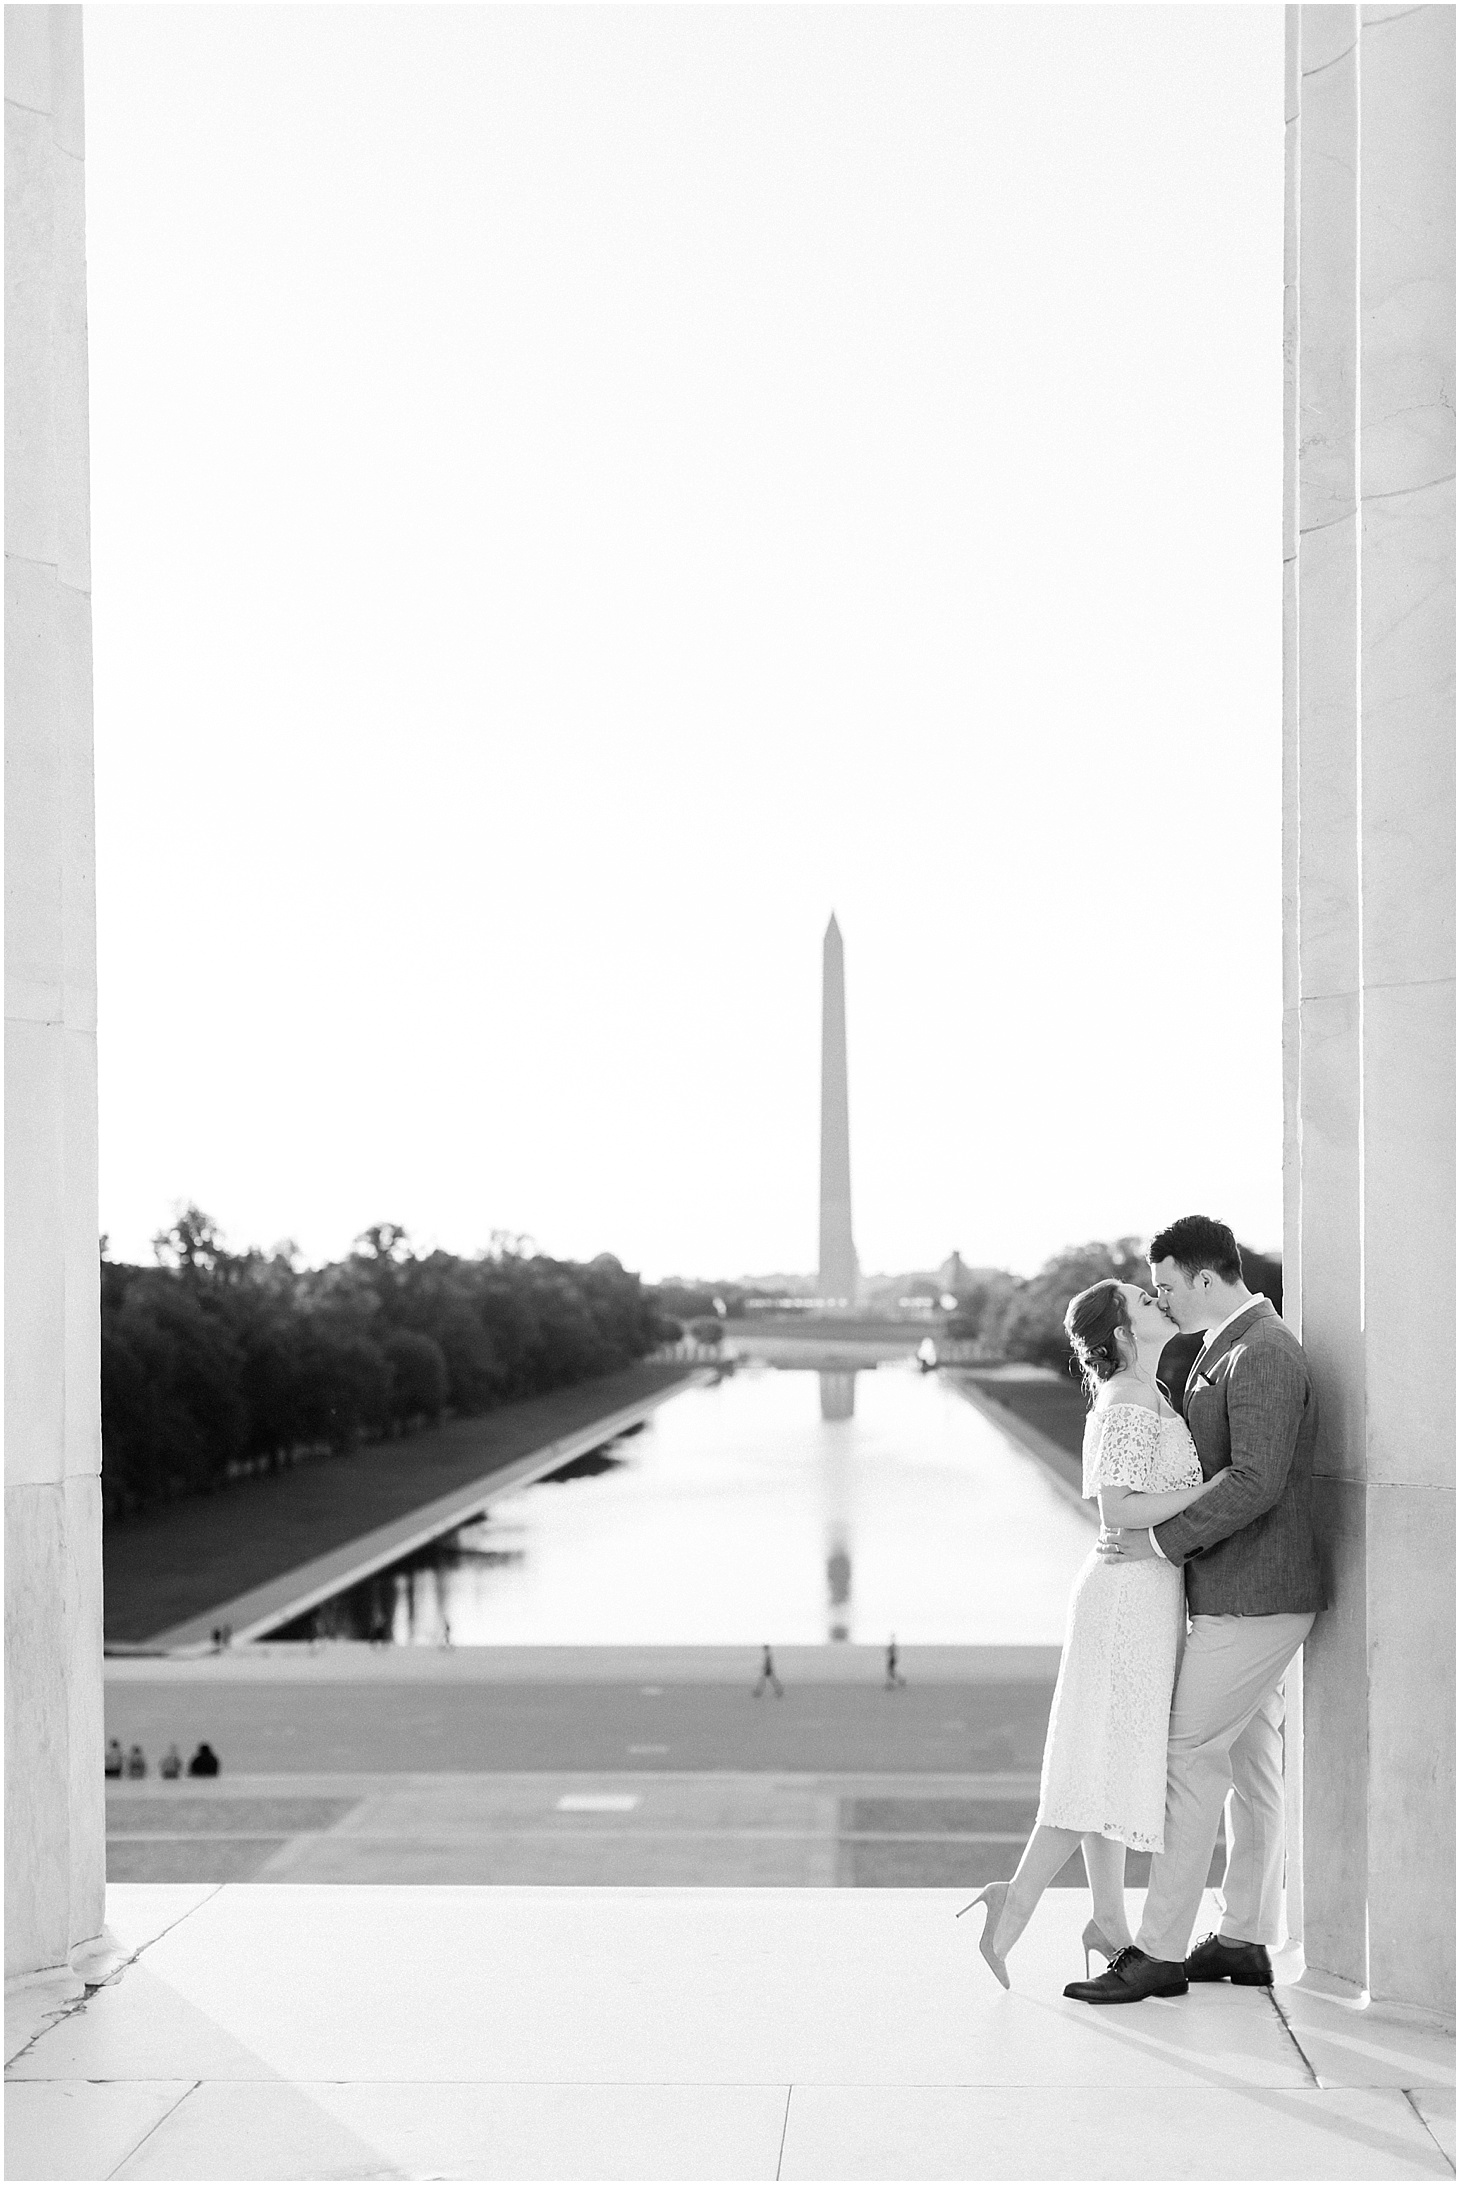 Portraits at the Lincoln Memorial Reflecting Pool, Intimate Sunrise Wedding Portraits at the Lincoln Memorial, Sarah Bradshaw Photography, DC Wedding Photographer